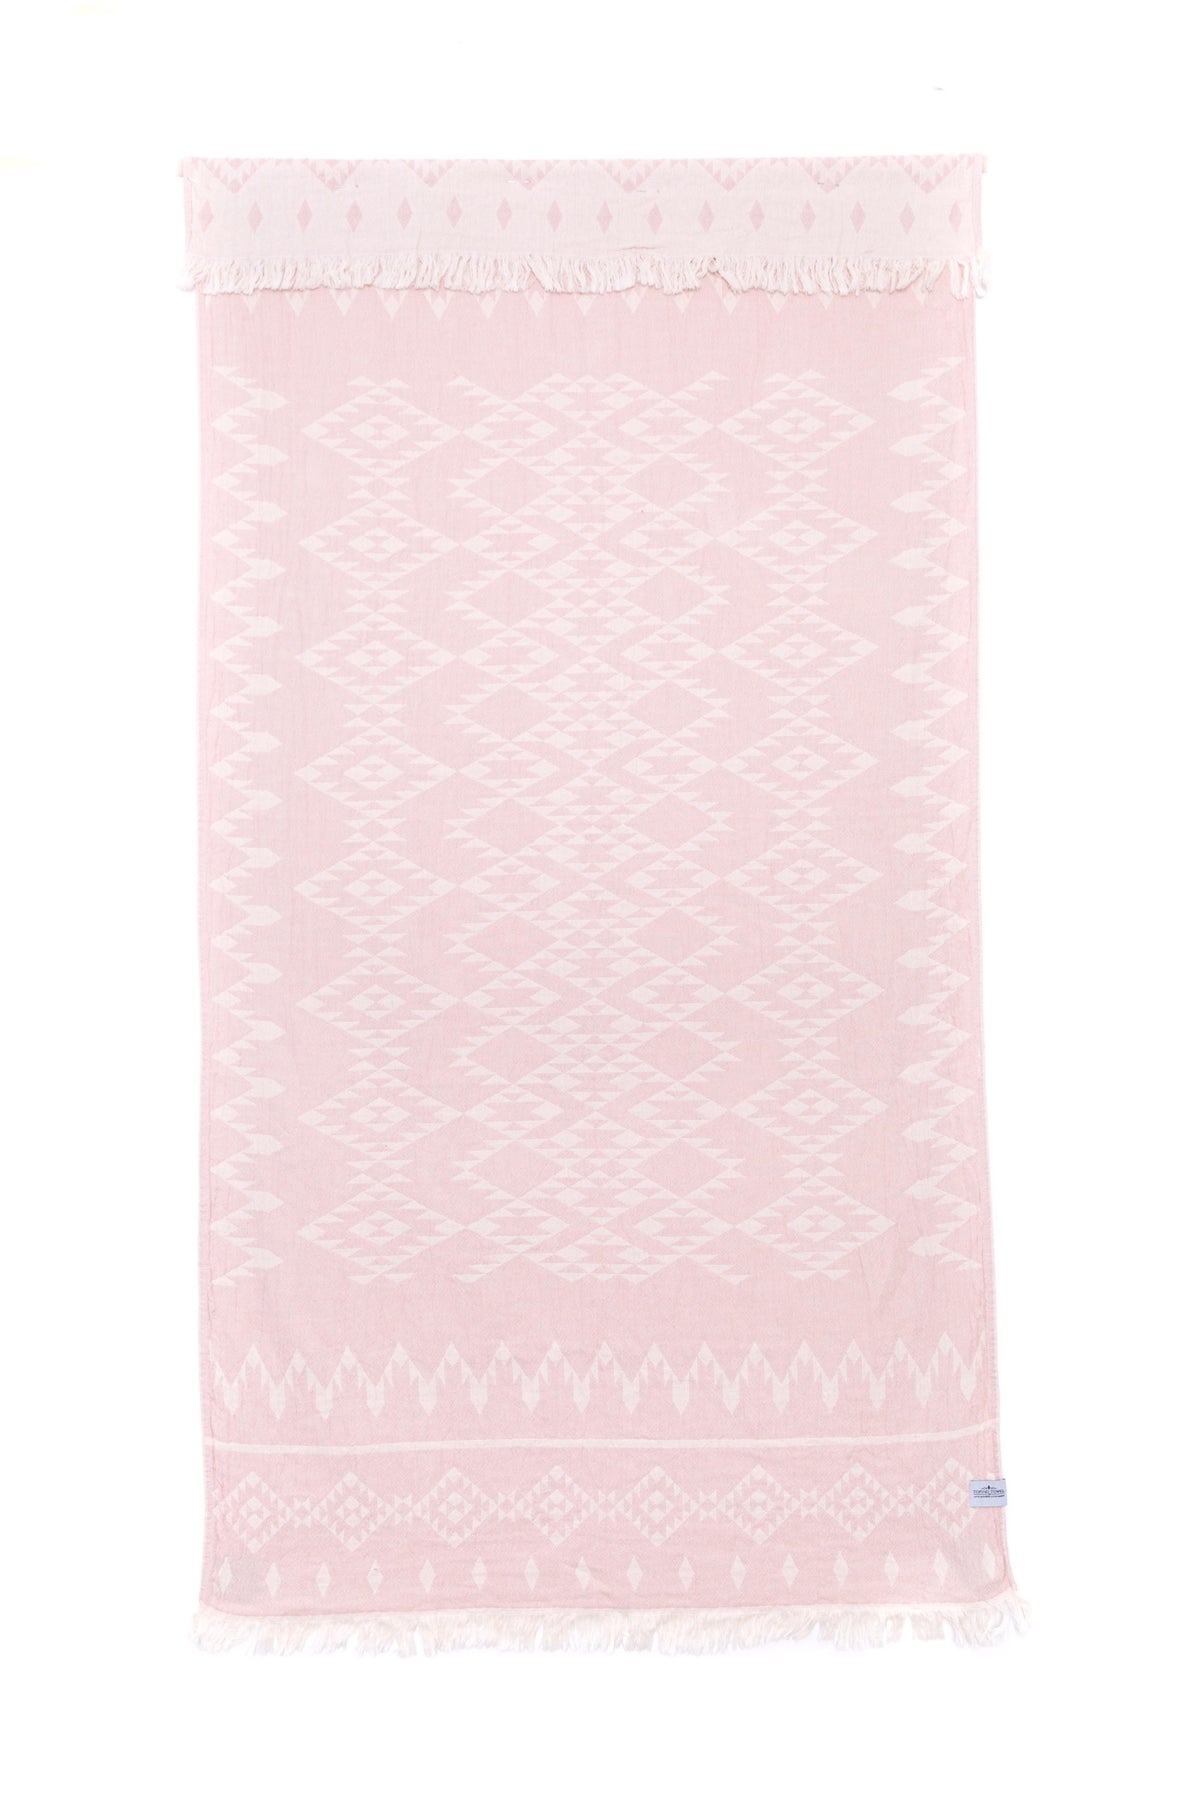 Tofino Towel Co. Coastal Towel